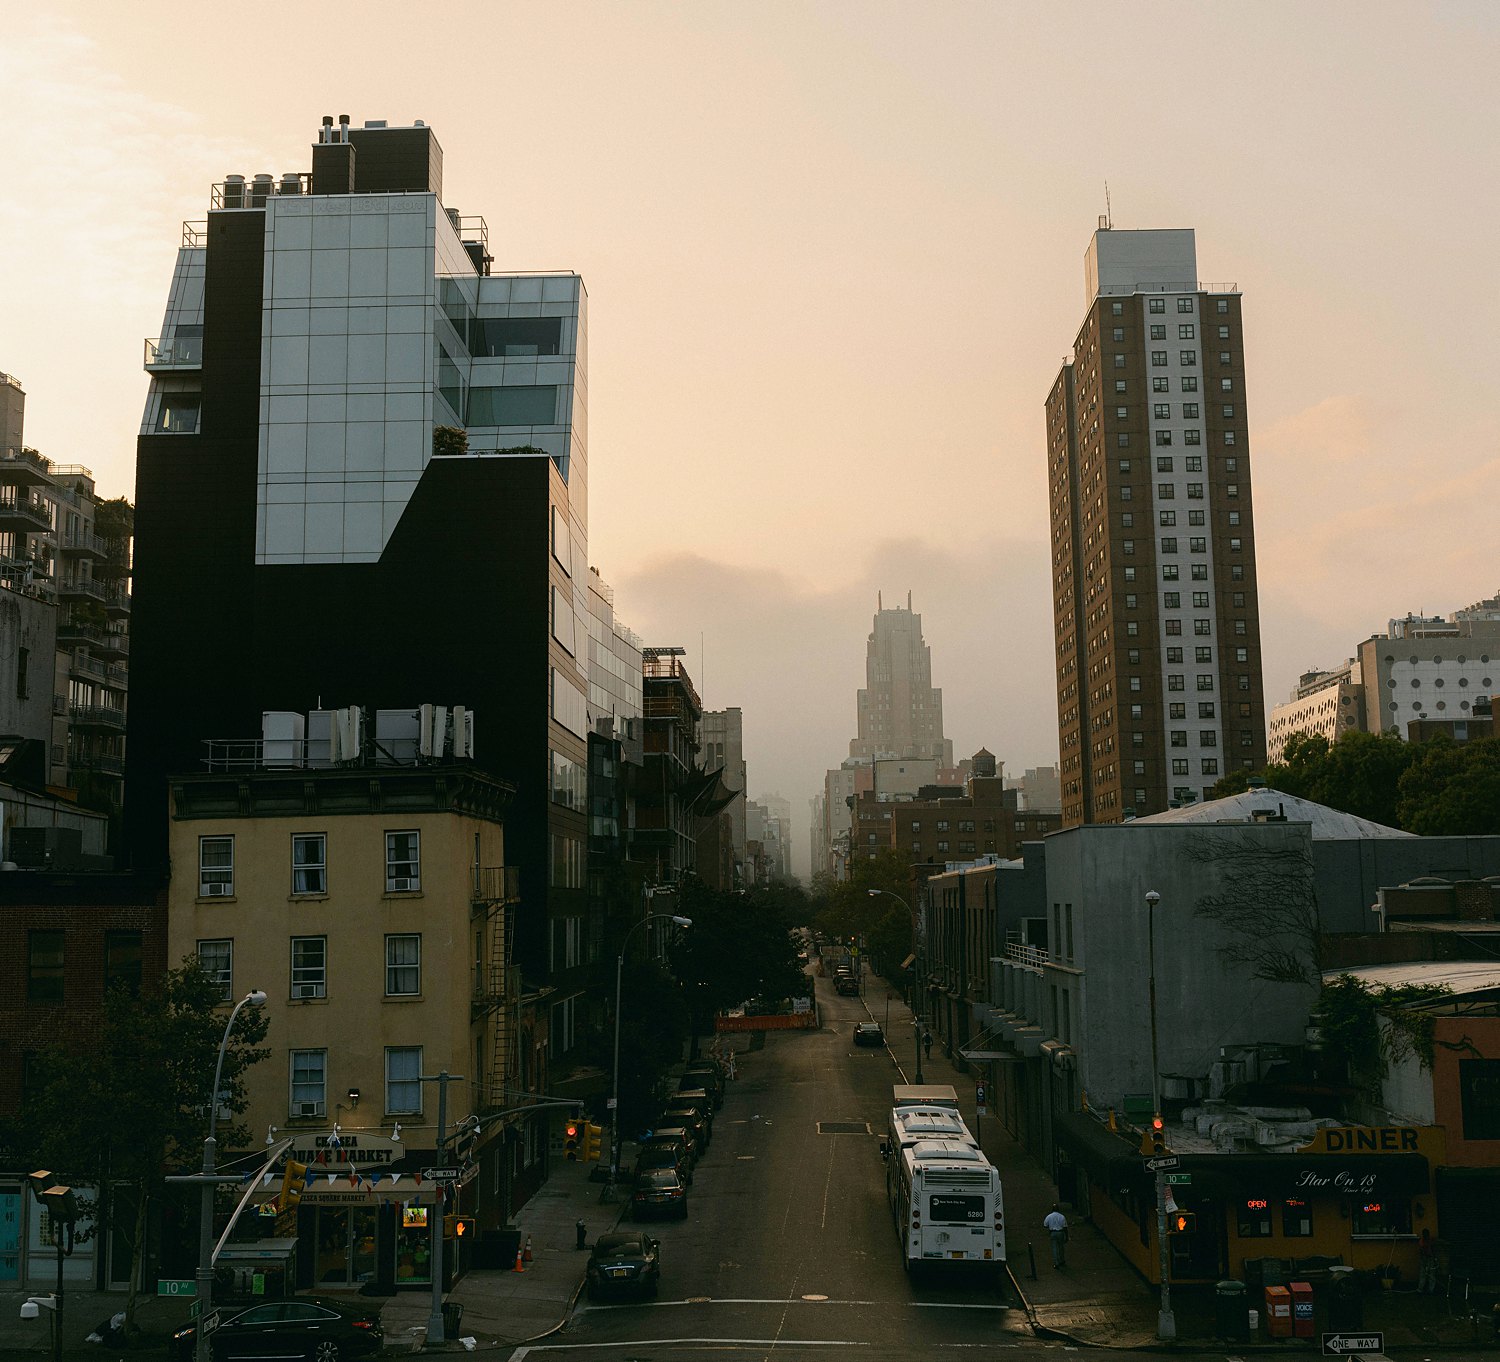 NYC chelsea street scene in early morning light